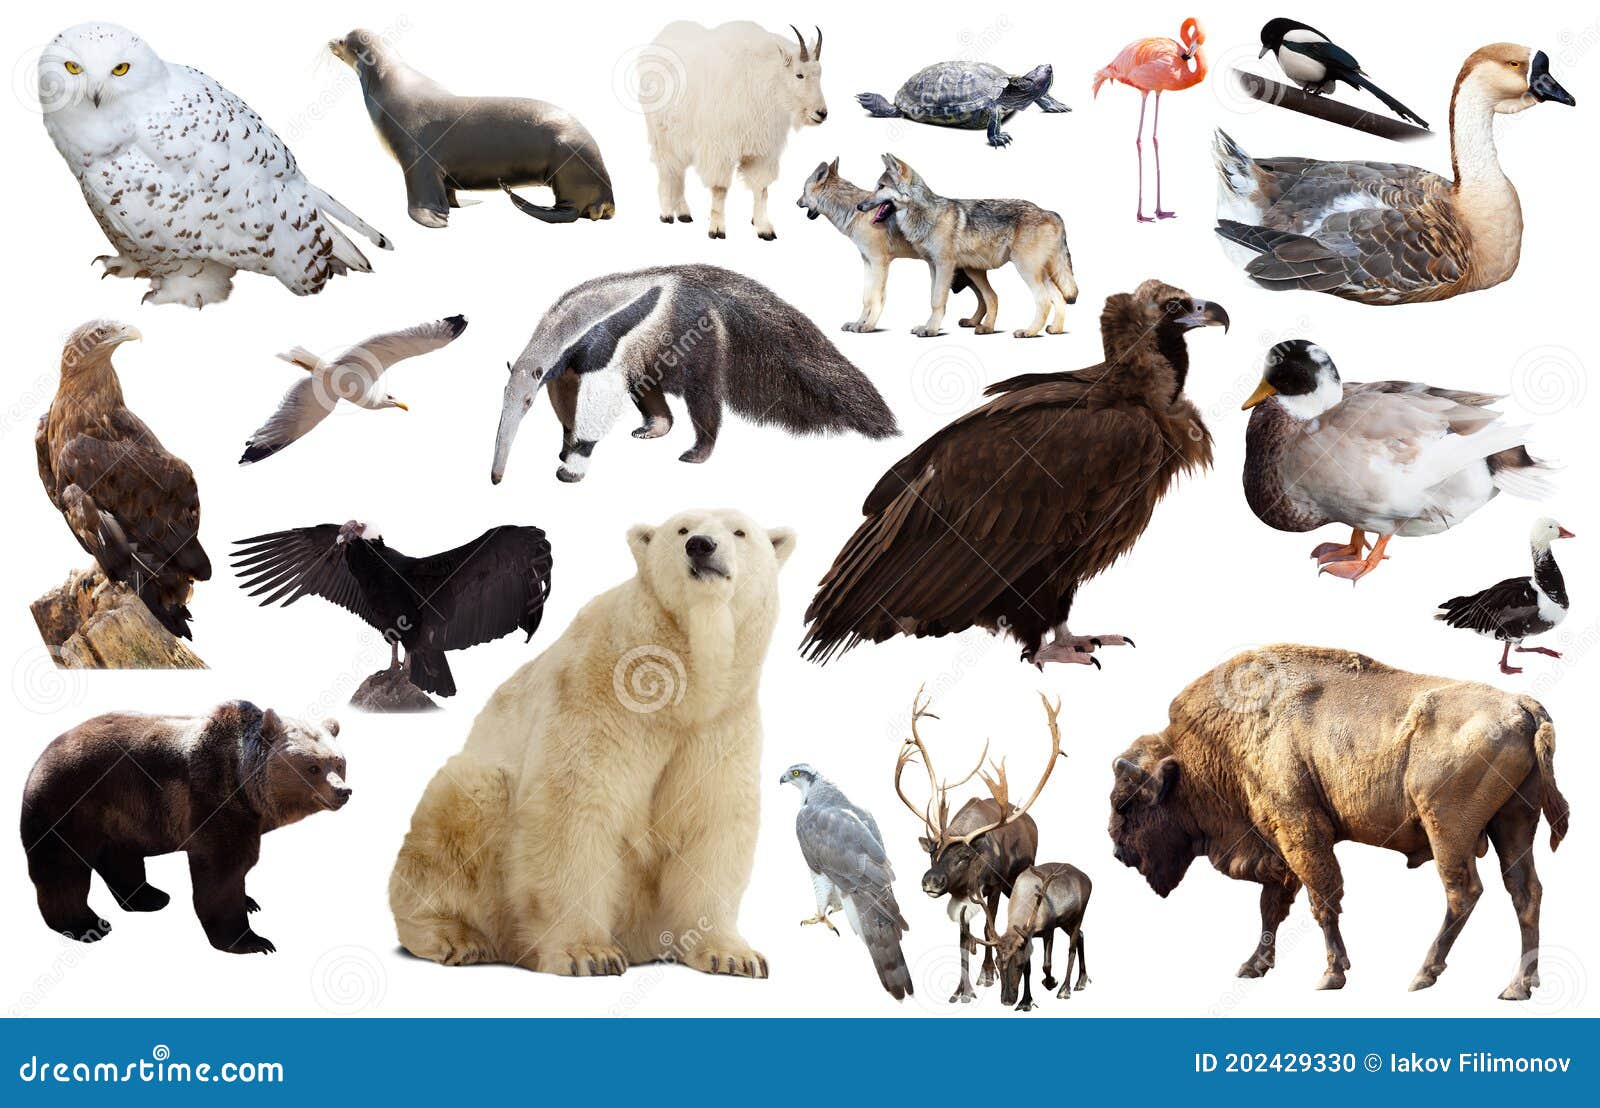 Northern America Animals on White Stock Photo - Image of north, assortment:  202429330